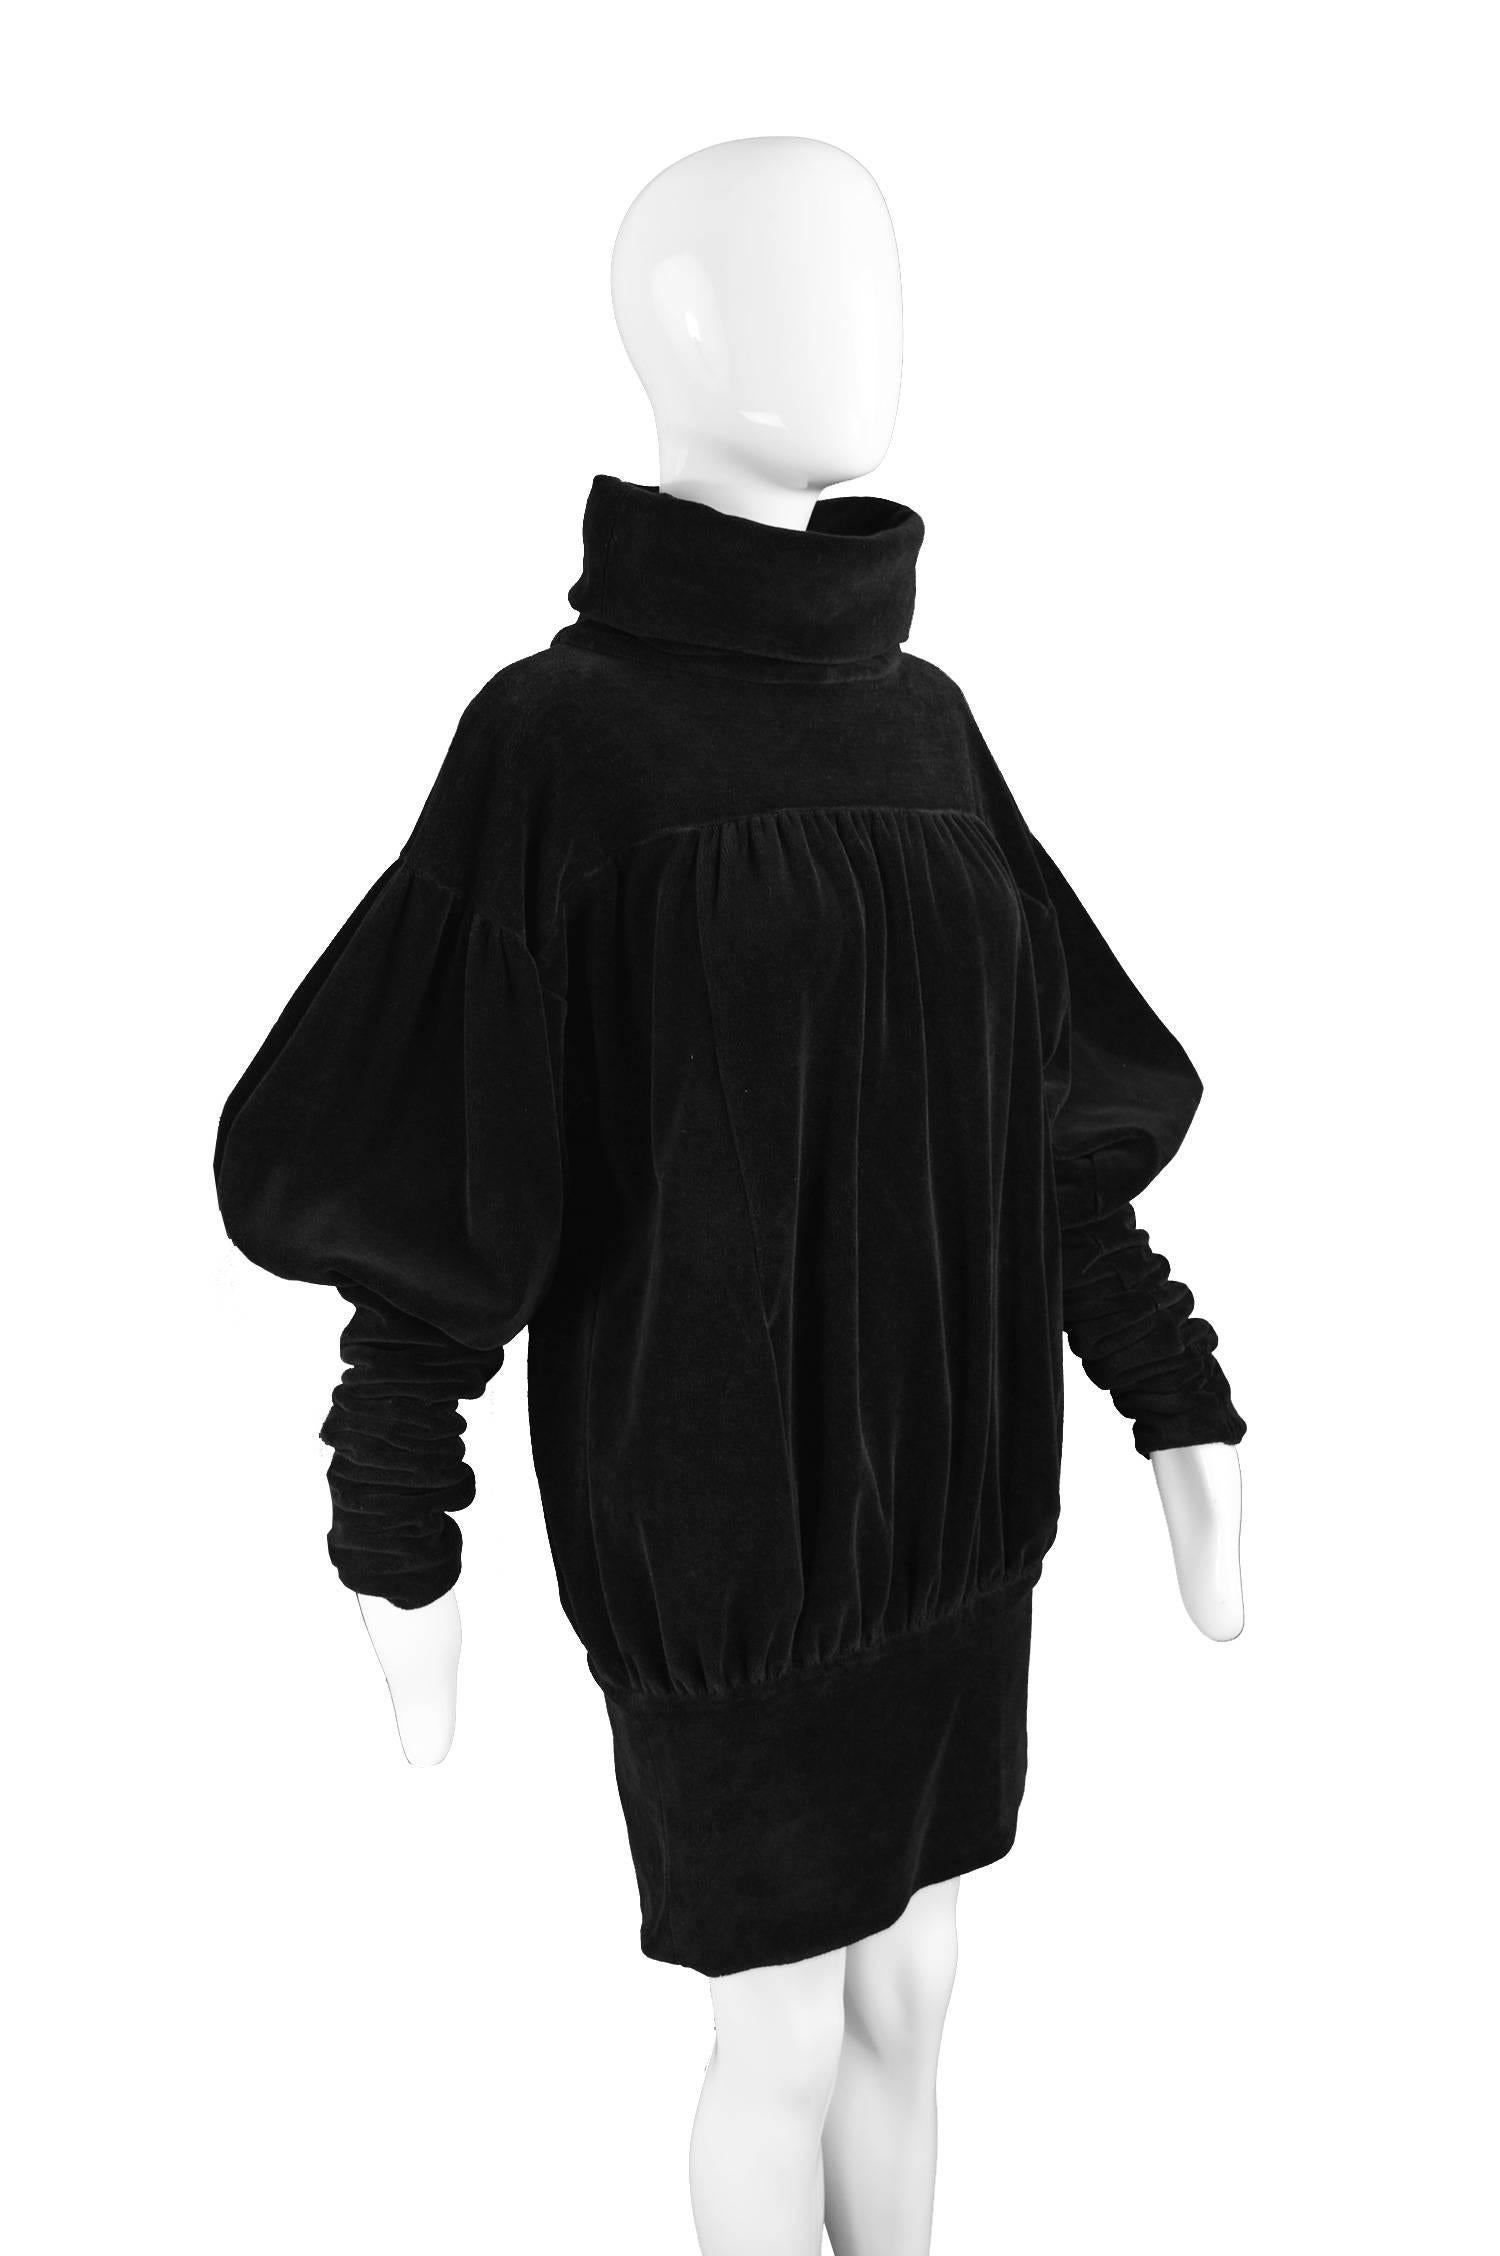 Gina Fratini Avant Garde Black Puff Sleeve Velour Dress, 1970s 1